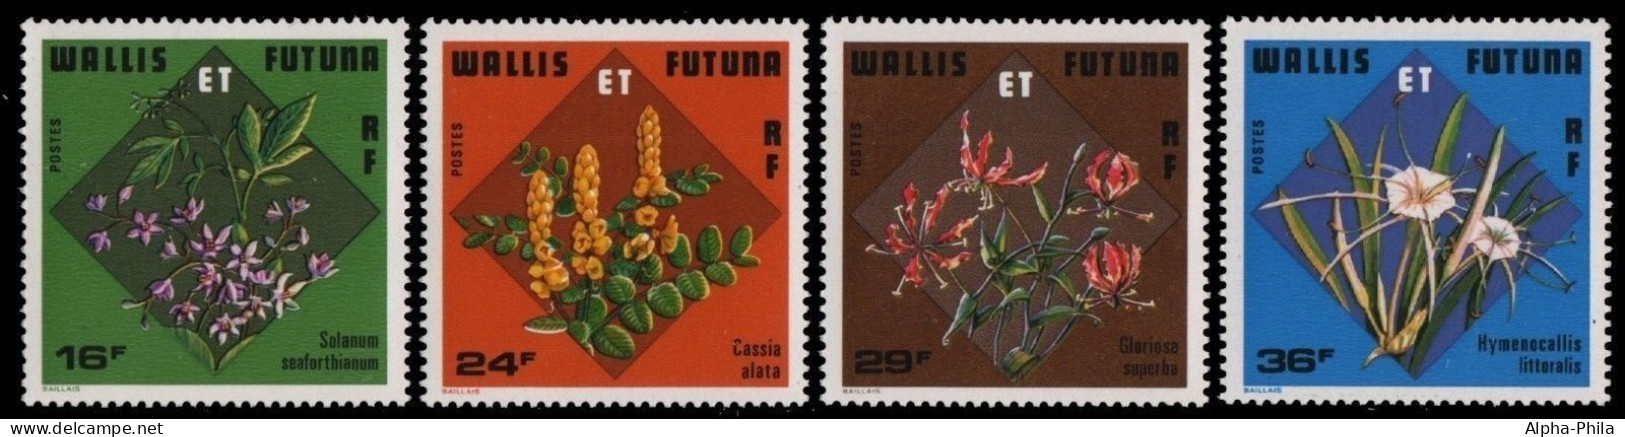 Wallis & Futuna 1978 - Mi-Nr. 311-314 ** - MNH - Blumen / Flowers - Oceania (Other)